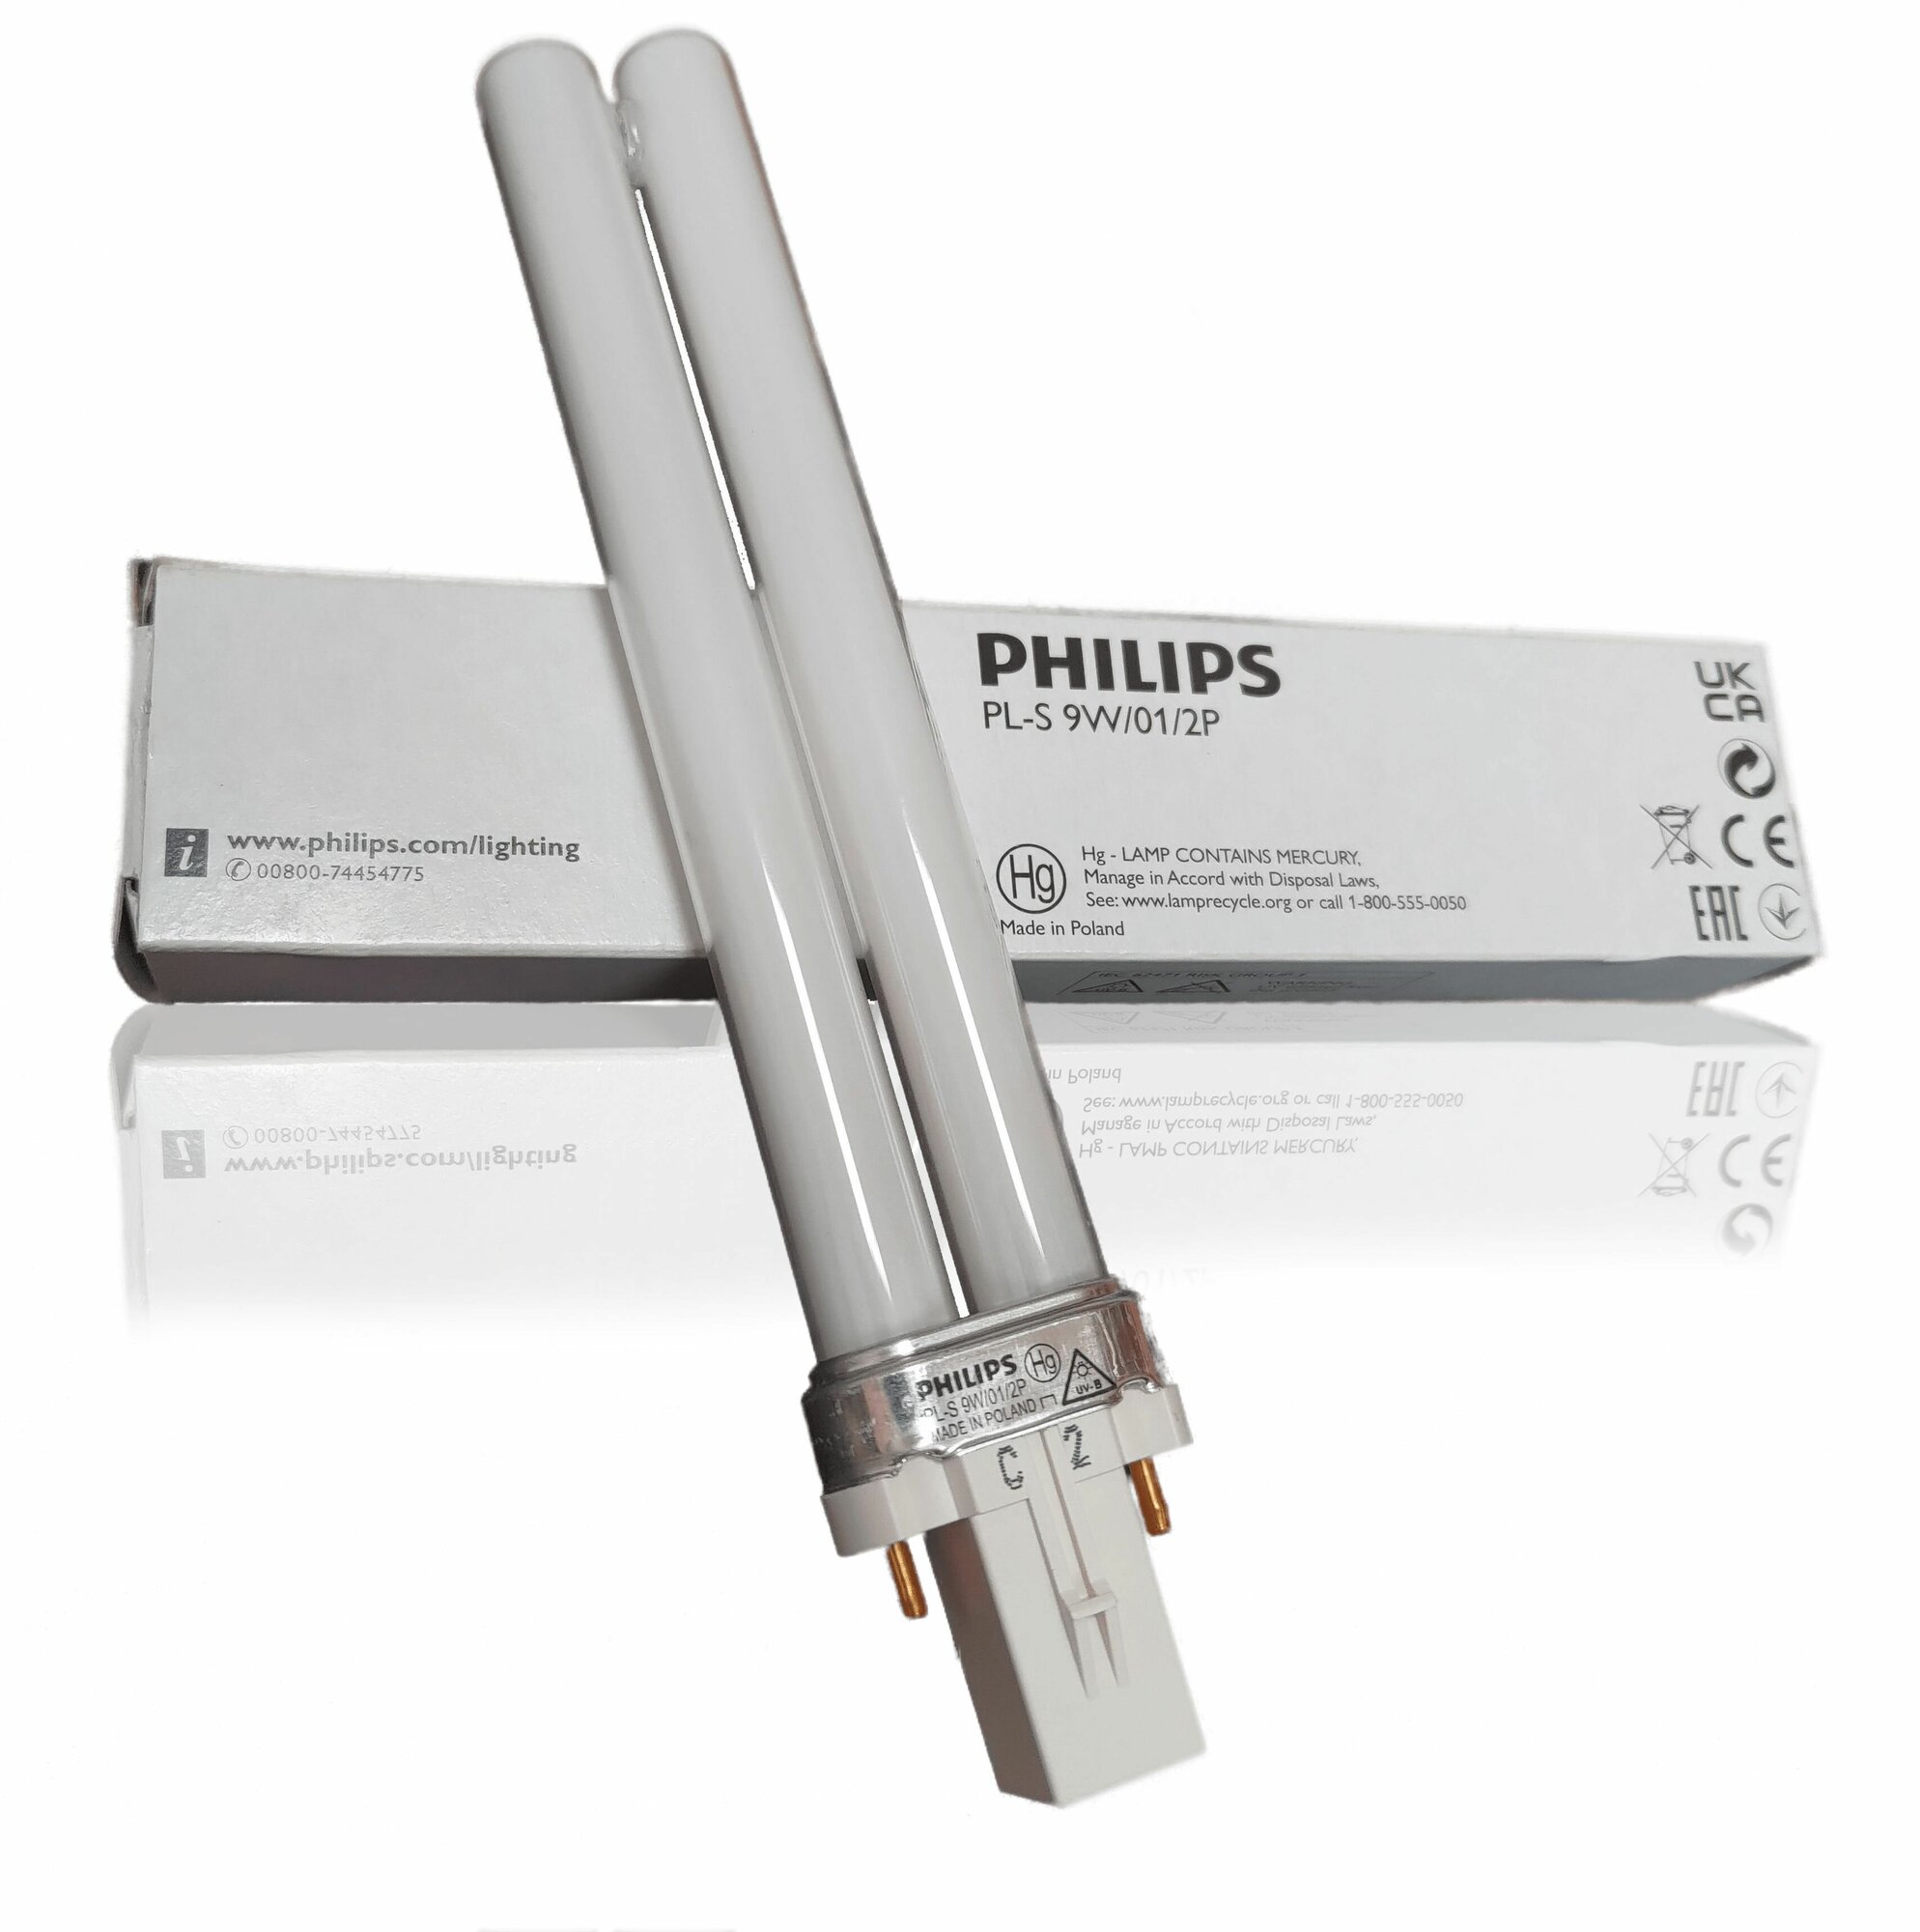 Philips 311nm UVB Narrowband PL-S 9W/01/2P – лампа диапазоном излучения 311нм